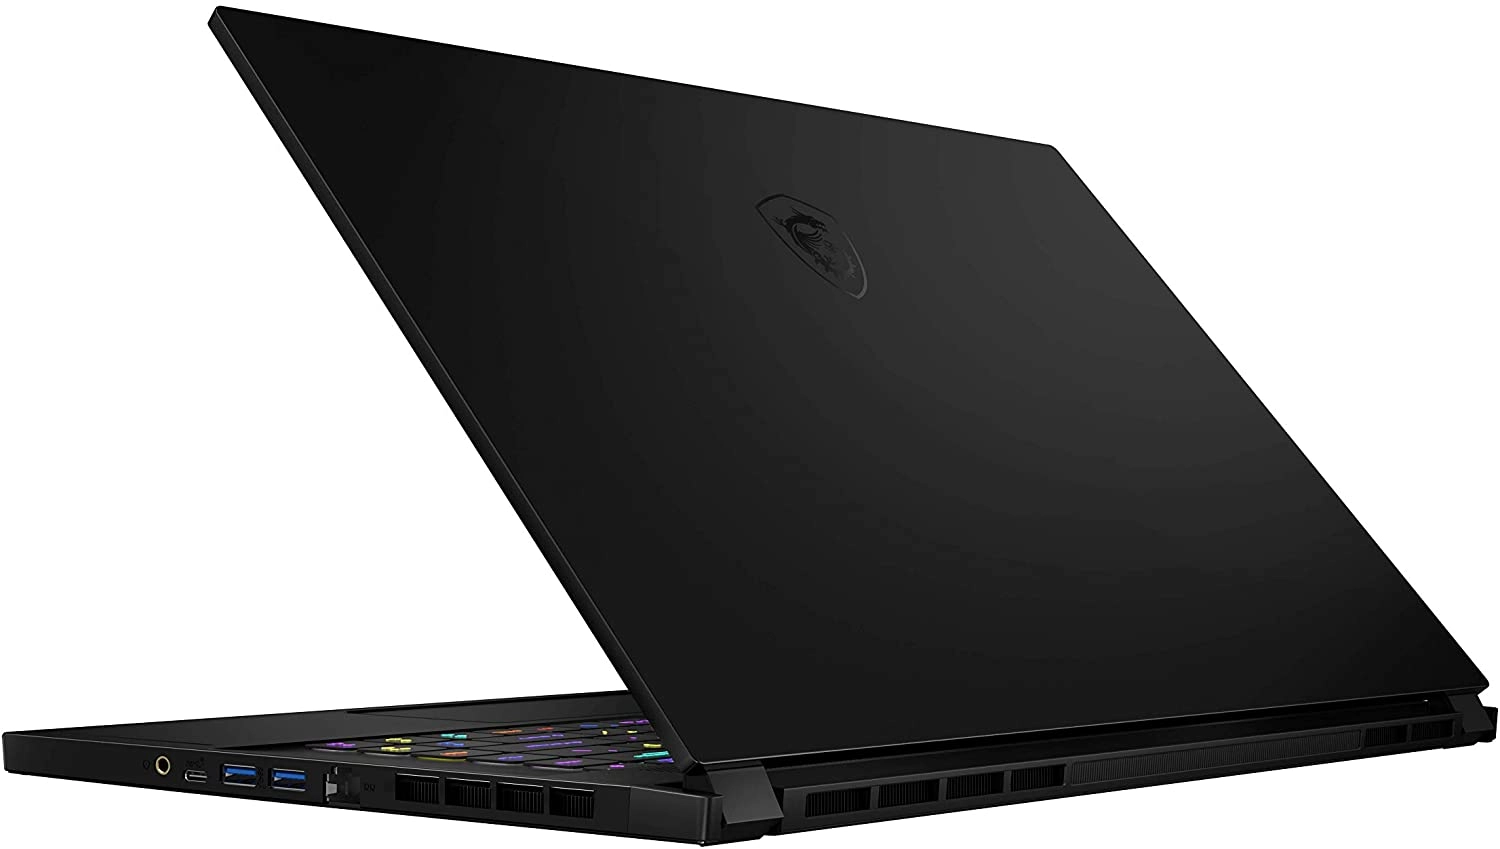 MSI GS66 Stealth 10SE-051ES laptop image